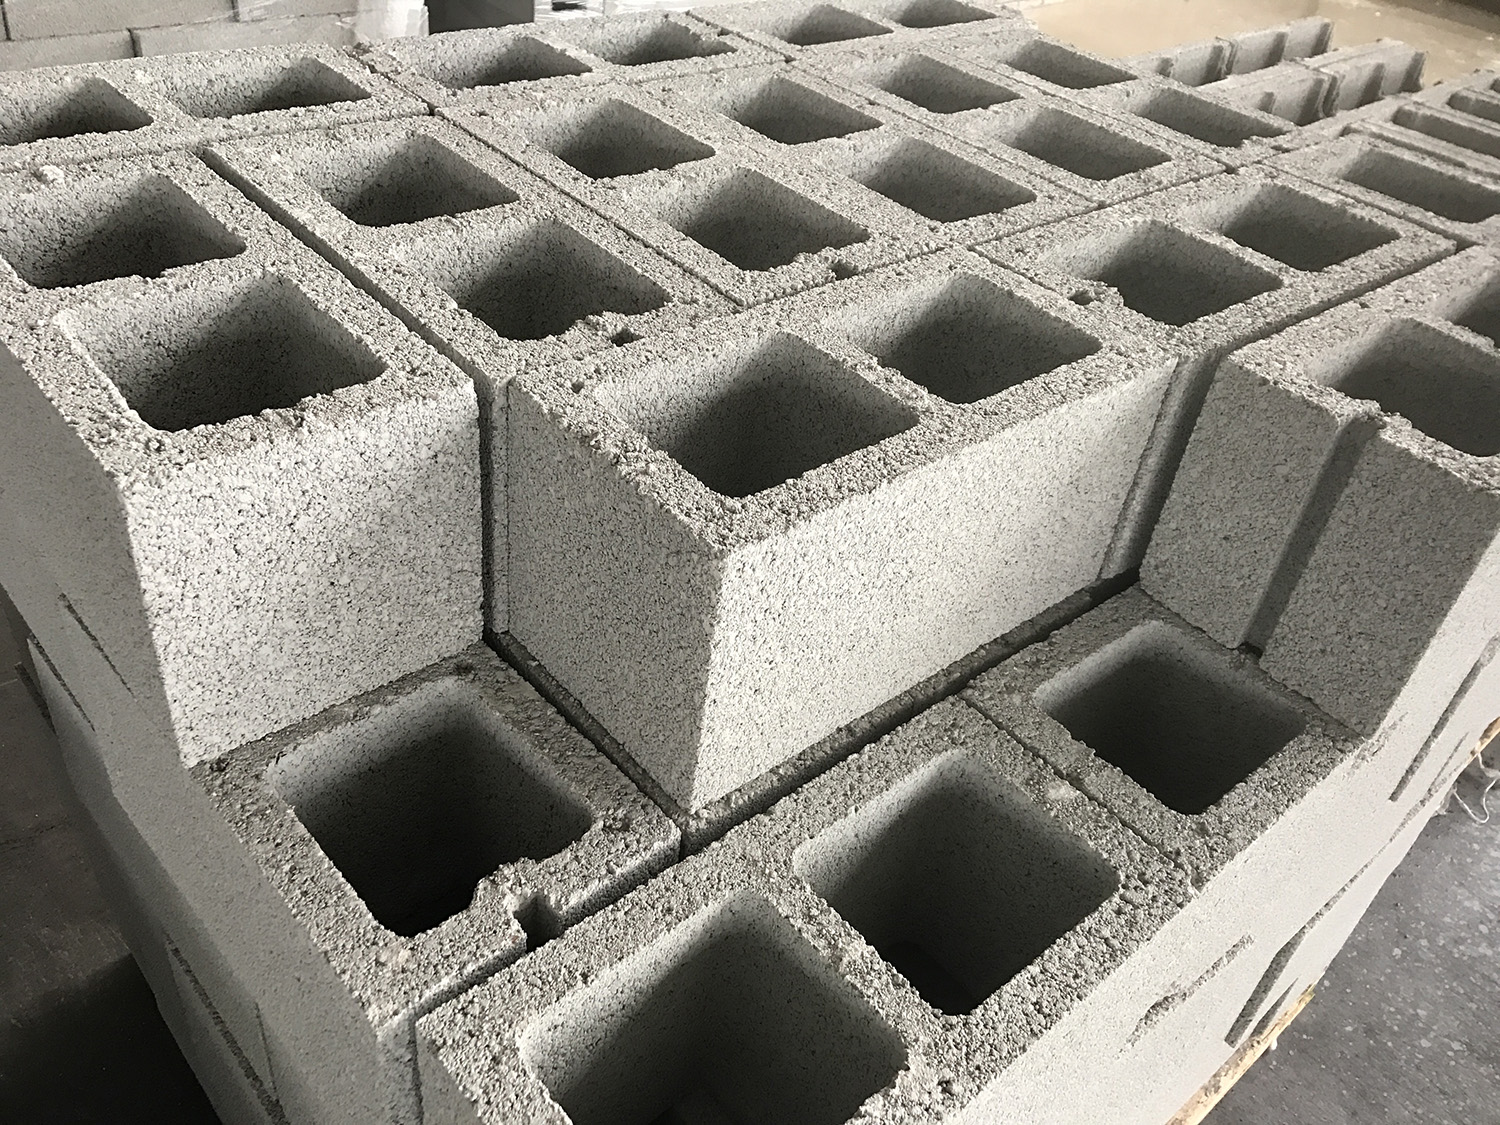 stack of cinder blocks on a jobsite